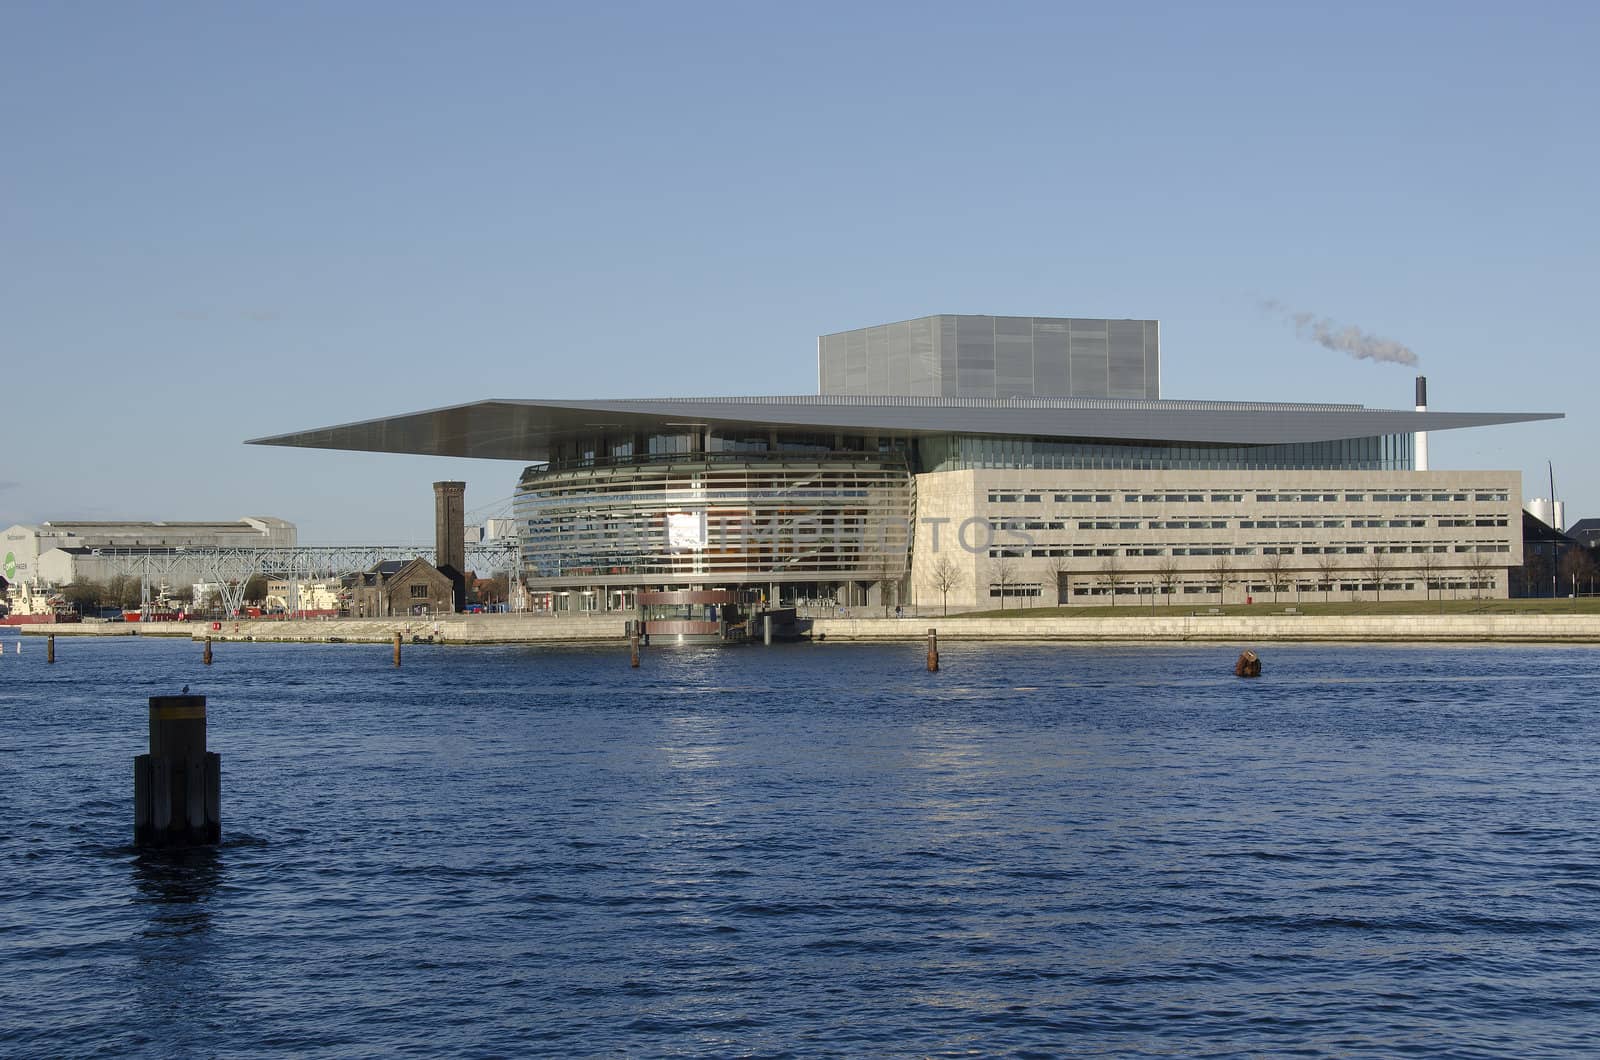 The Copenhagen Opera House, Operaen, seen from the side